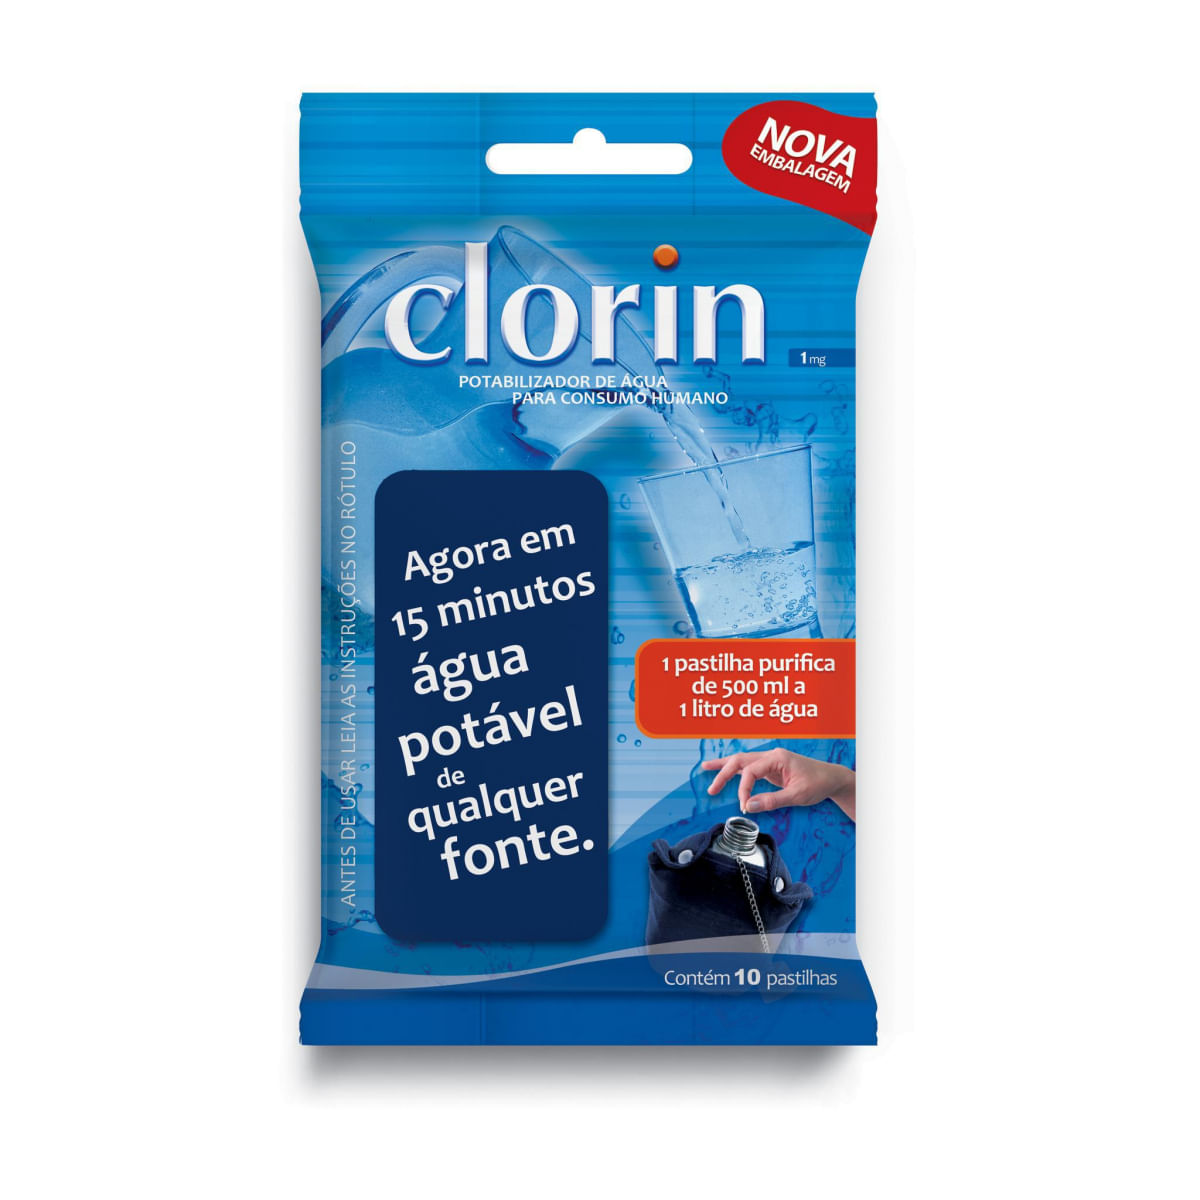 Clorin 1 - Higienizador, Purificador De Água, 1 Cartela